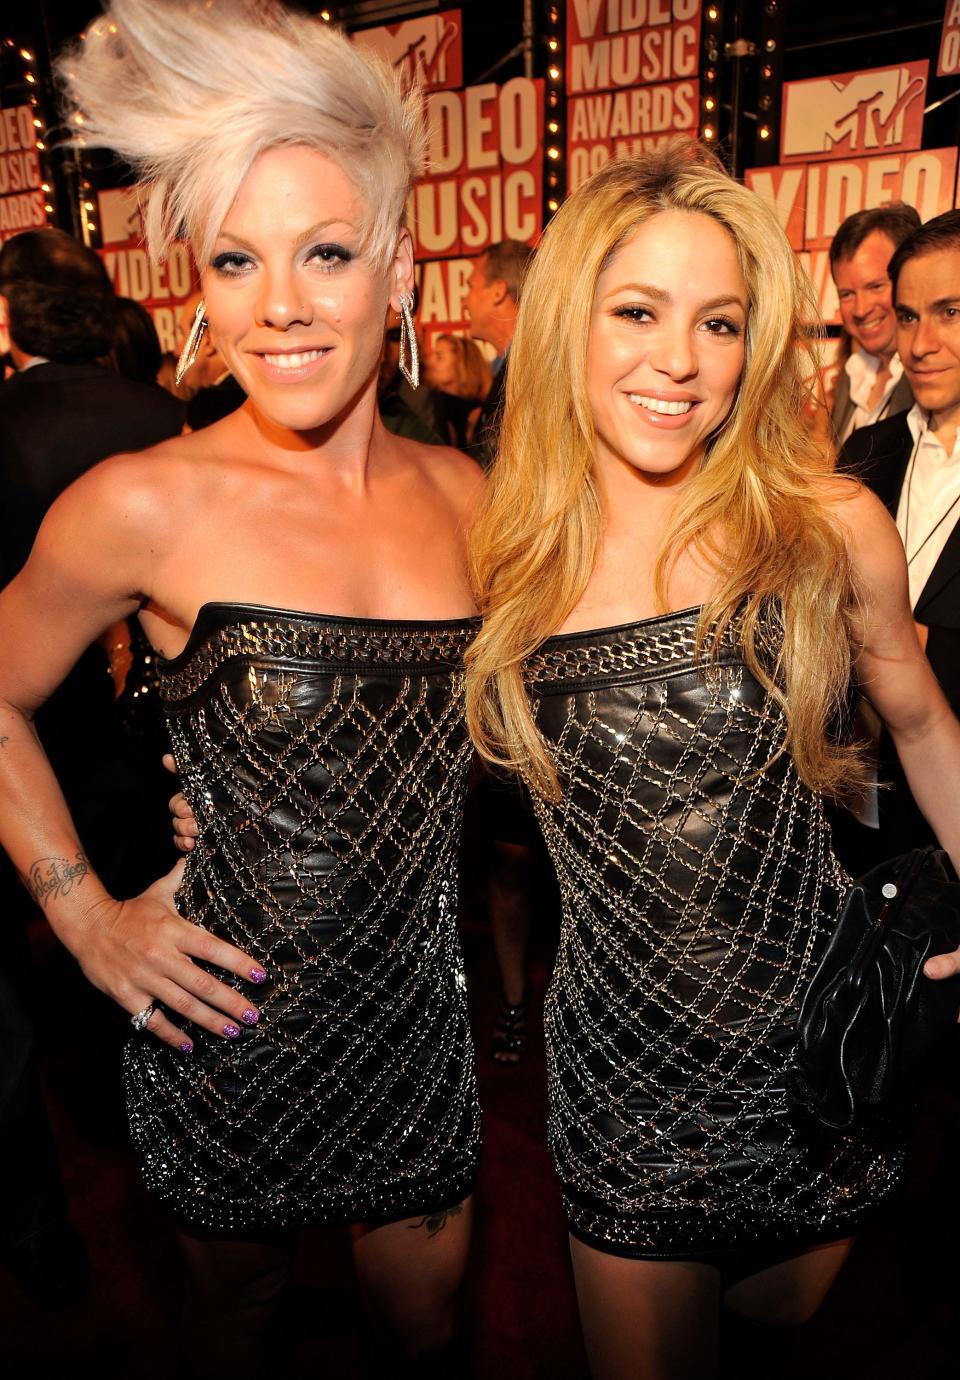 Pink and Shakira matching at the 2009 MTV Video Music Awards.